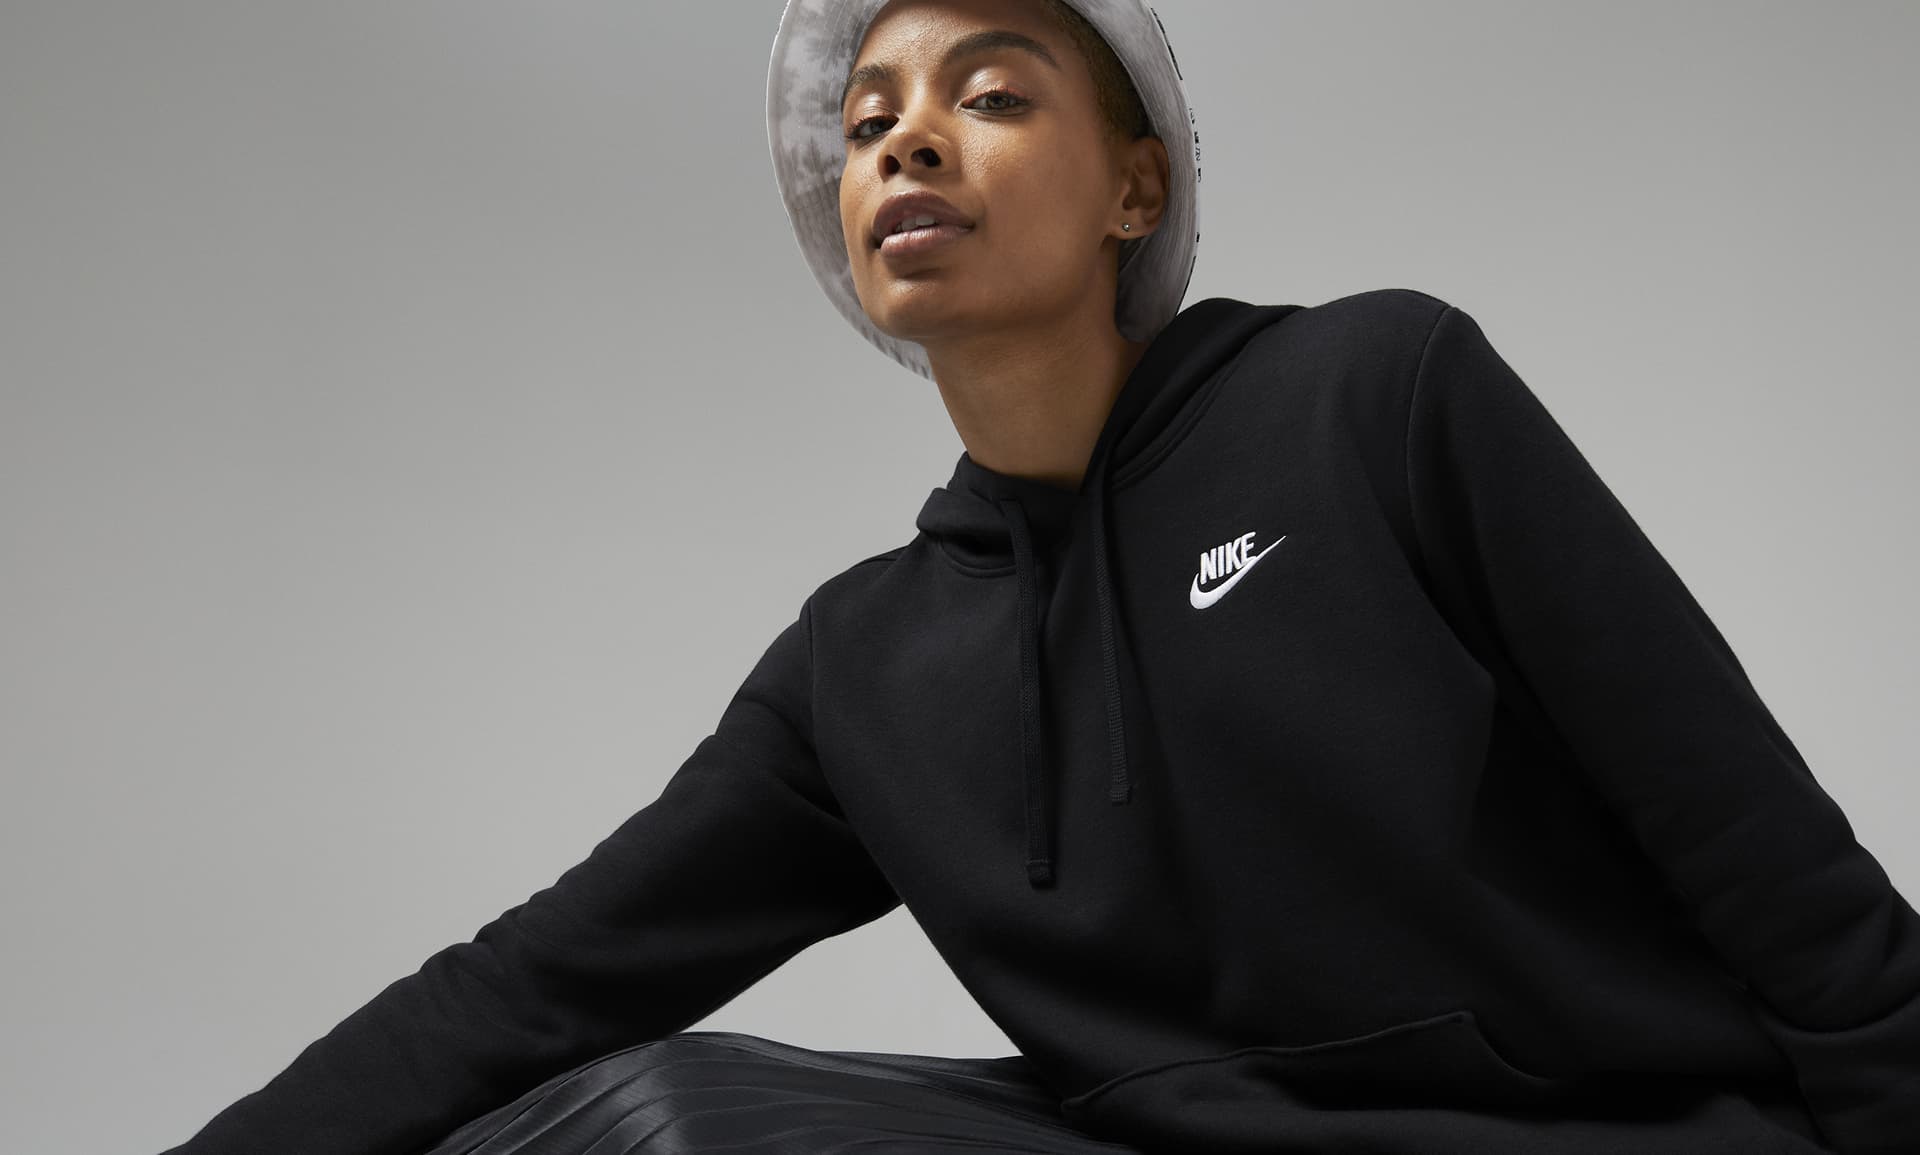 Nike Sportswear Club Fleece Women's Pullover Hoodie. Nike SA